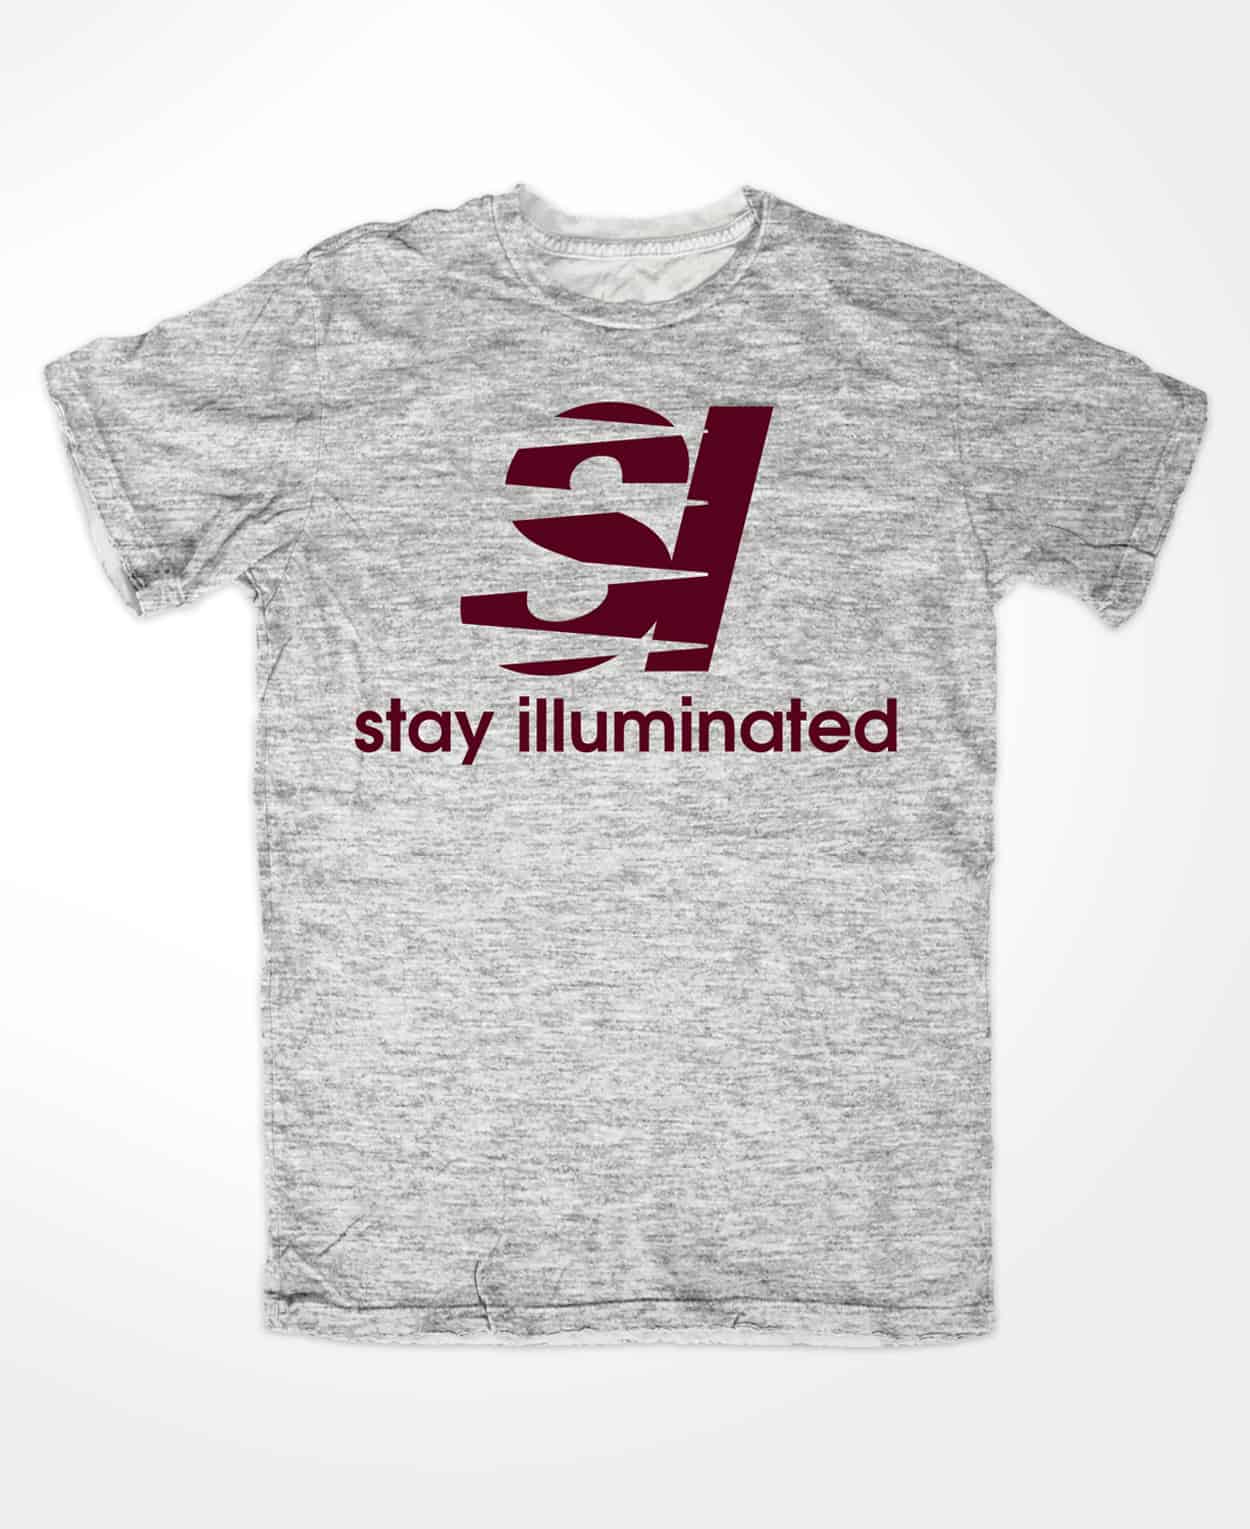 stay illuminated - new balance - shirt design